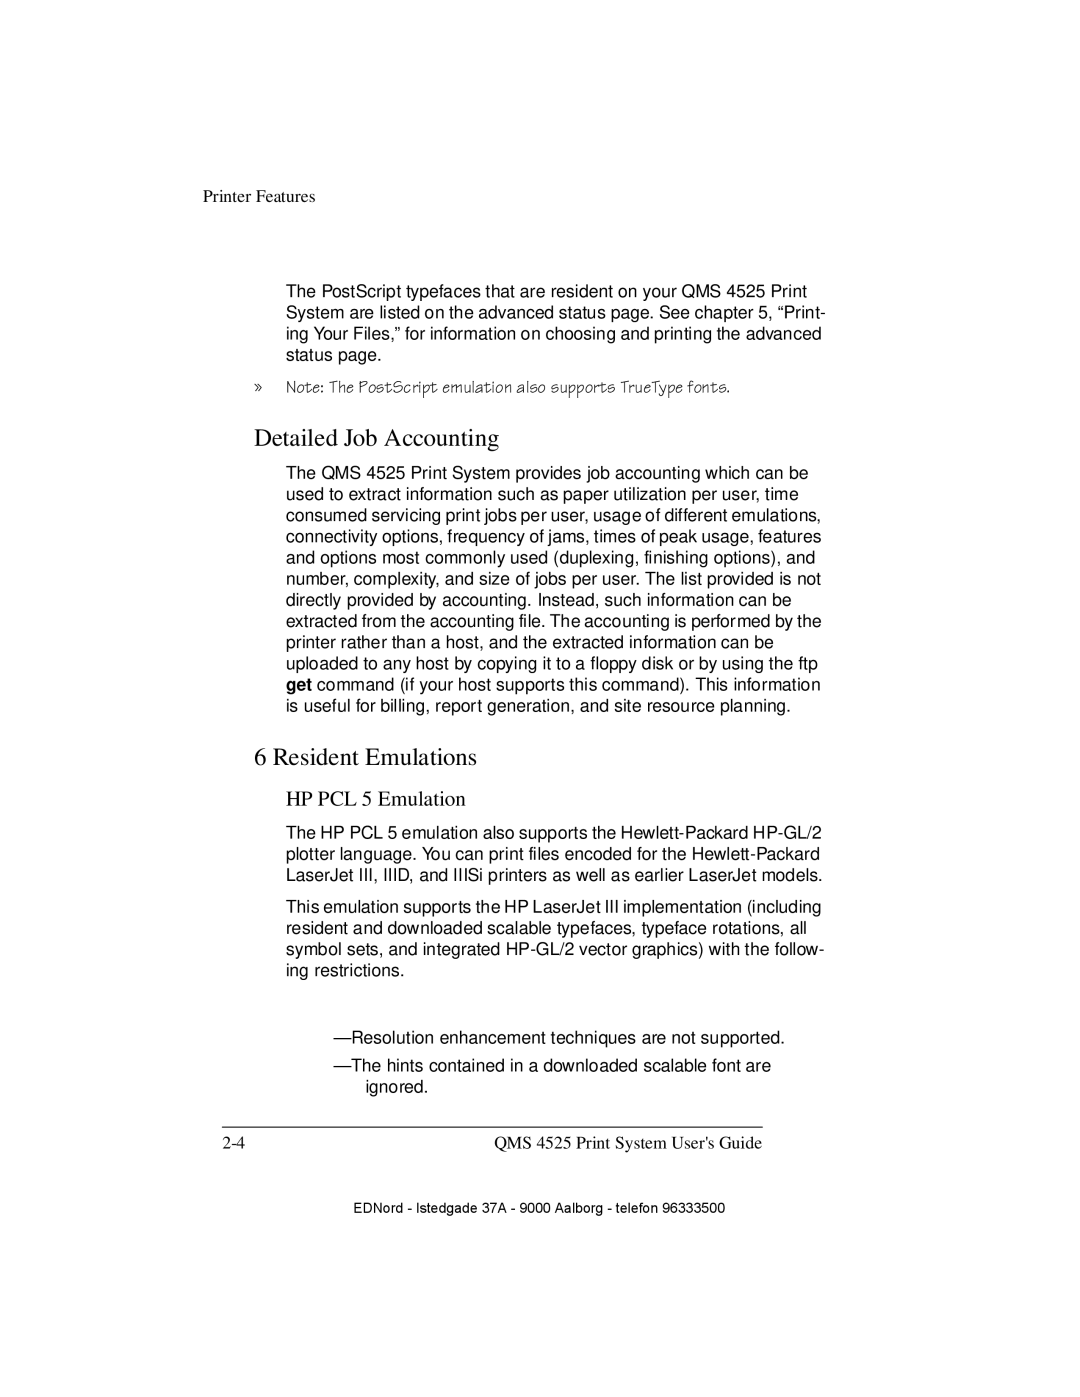 IBM QMS 4525 manual Detailed Job Accounting, Resident Emulations, HP PCL 5 Emulation 